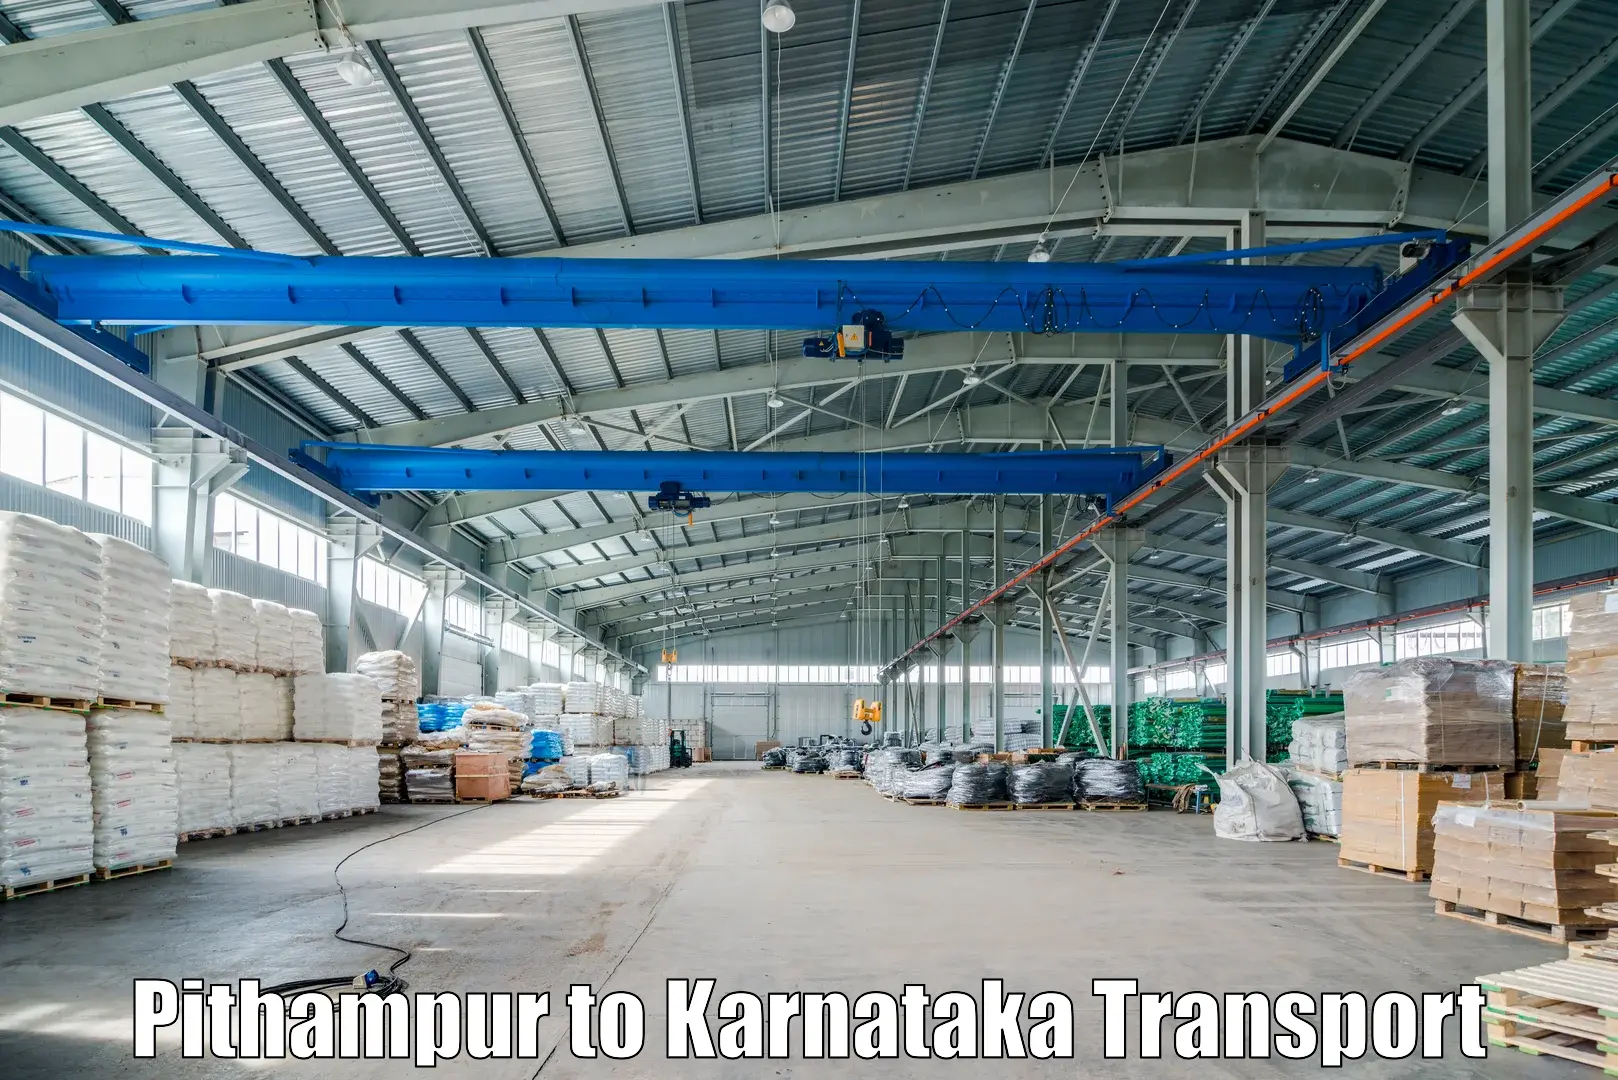 Shipping partner Pithampur to Kalaburagi